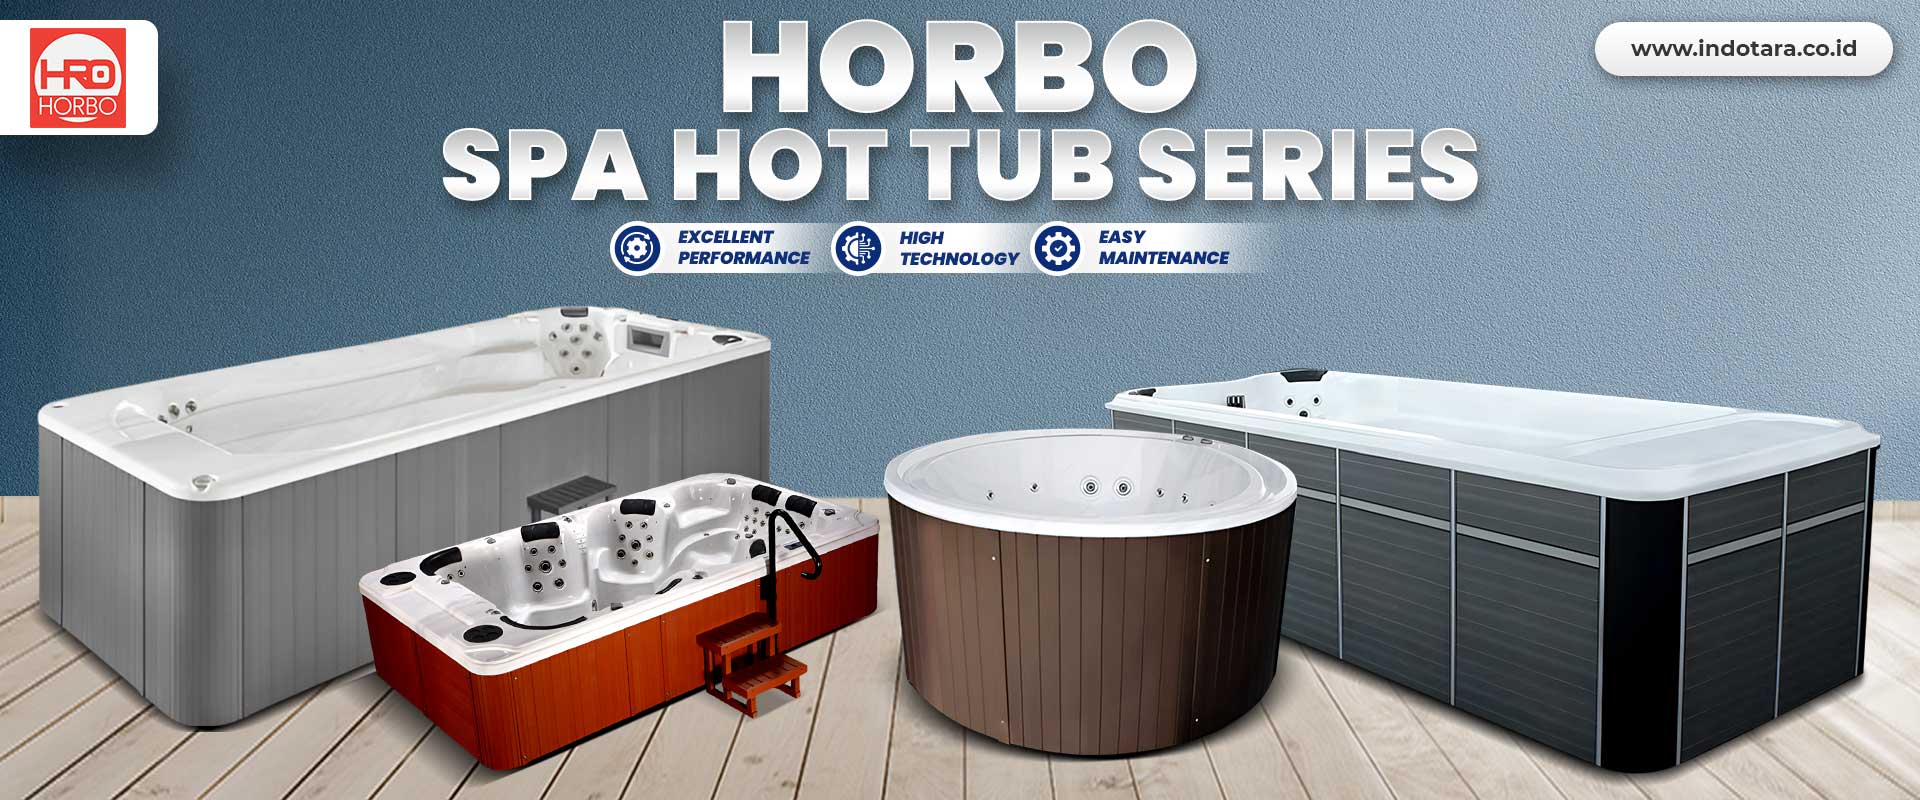 Horbo Spa Hot Tub Series